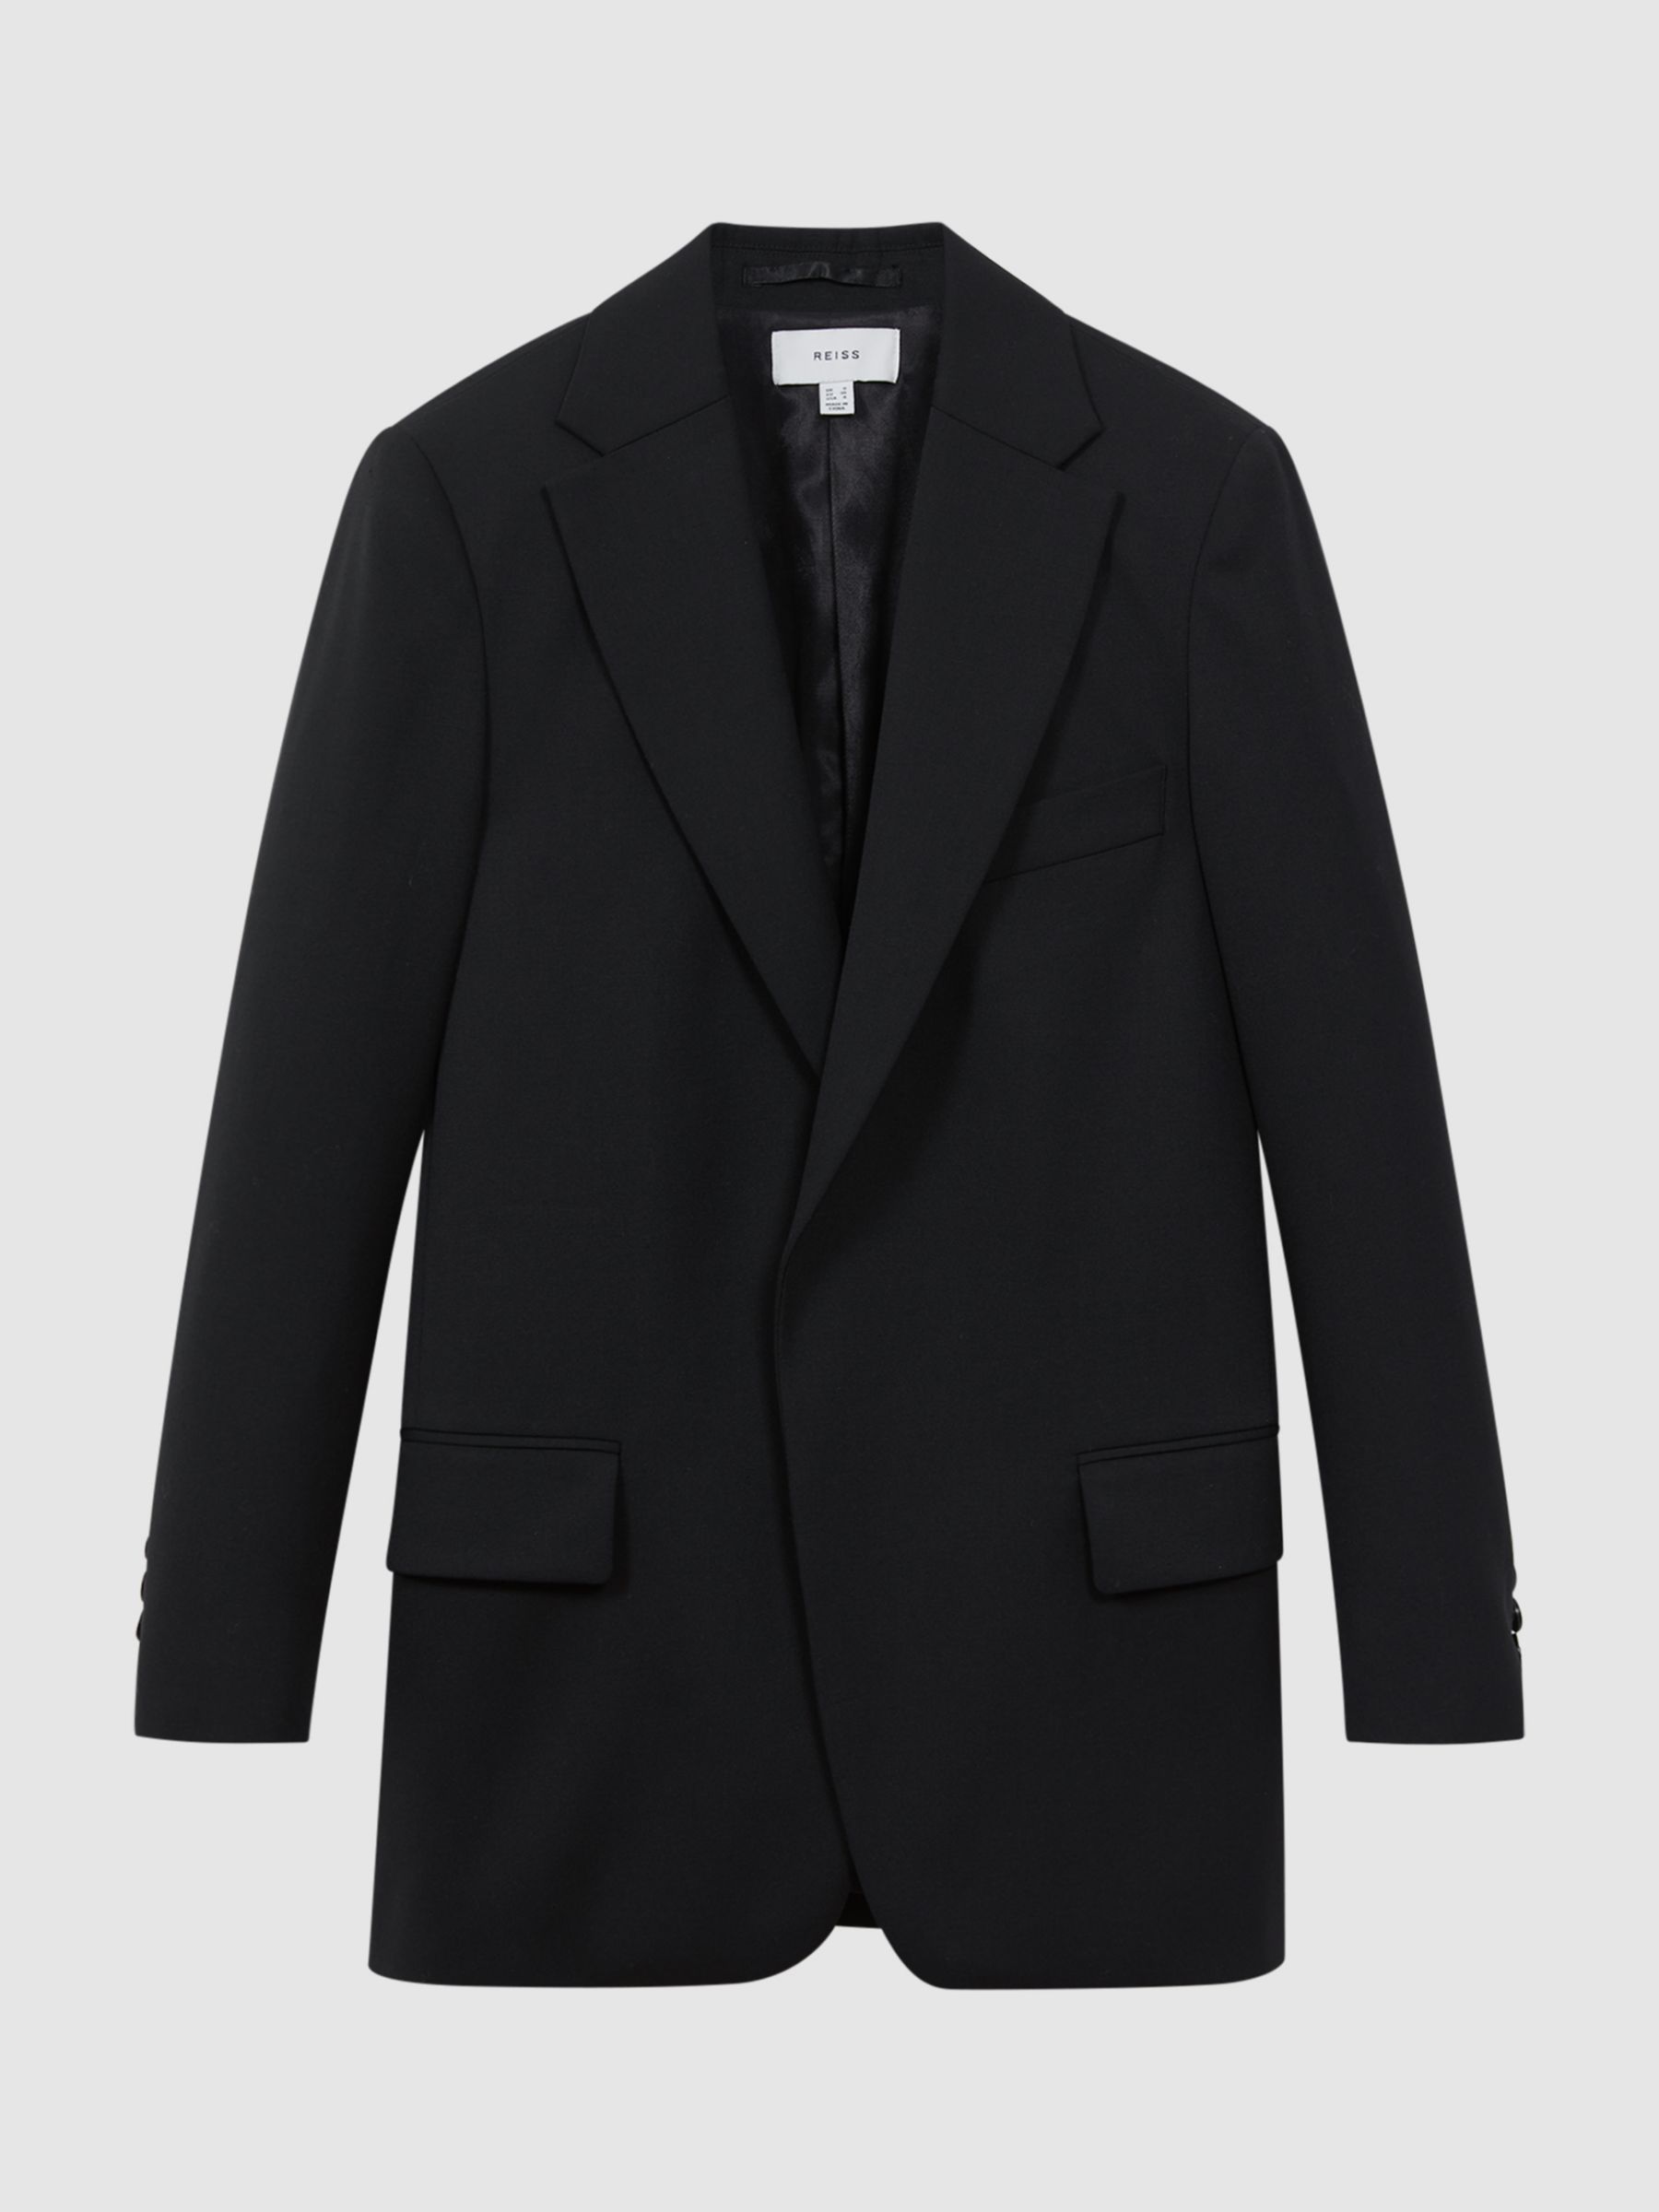 Reiss Alia Wool Blend Oversized Blazer, Black at John Lewis & Partners